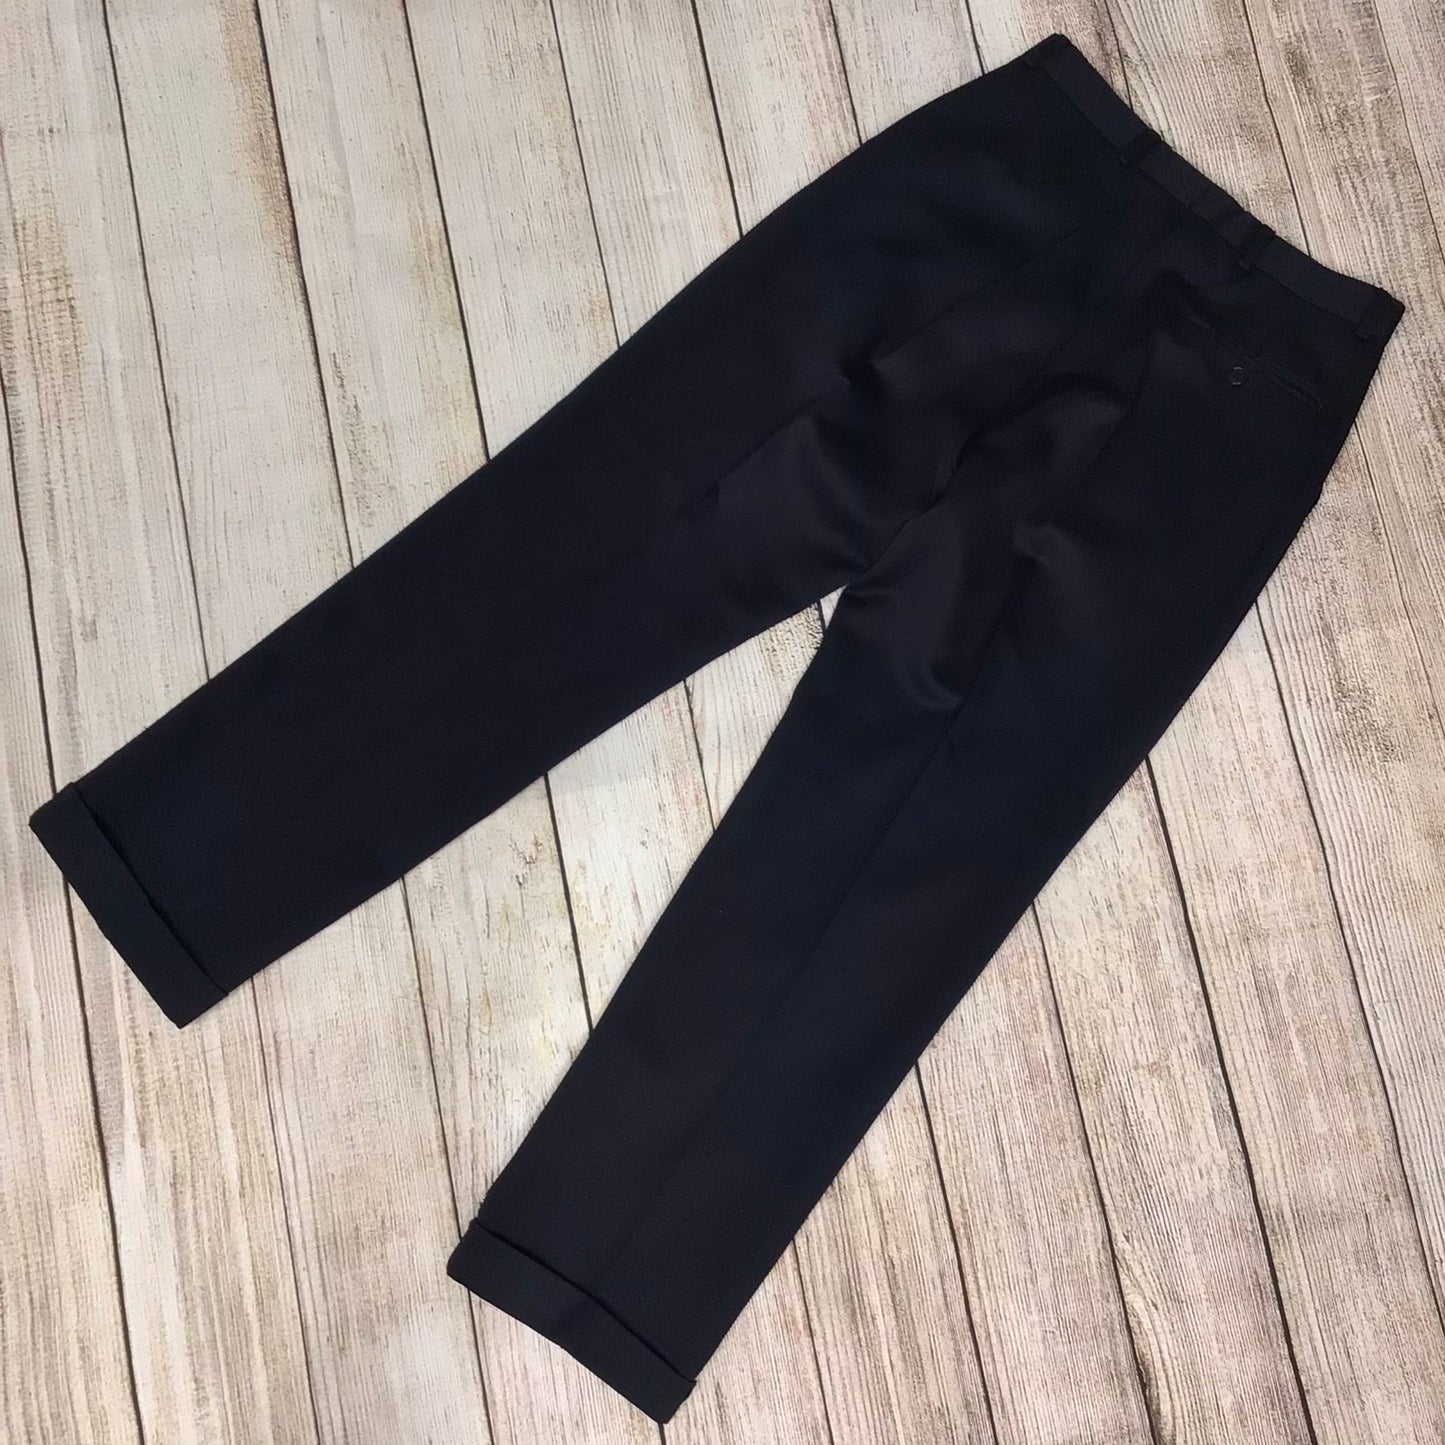 Yves Saint Laurent Black Double Breasted 2 Piece Suit 100% Wool Size L